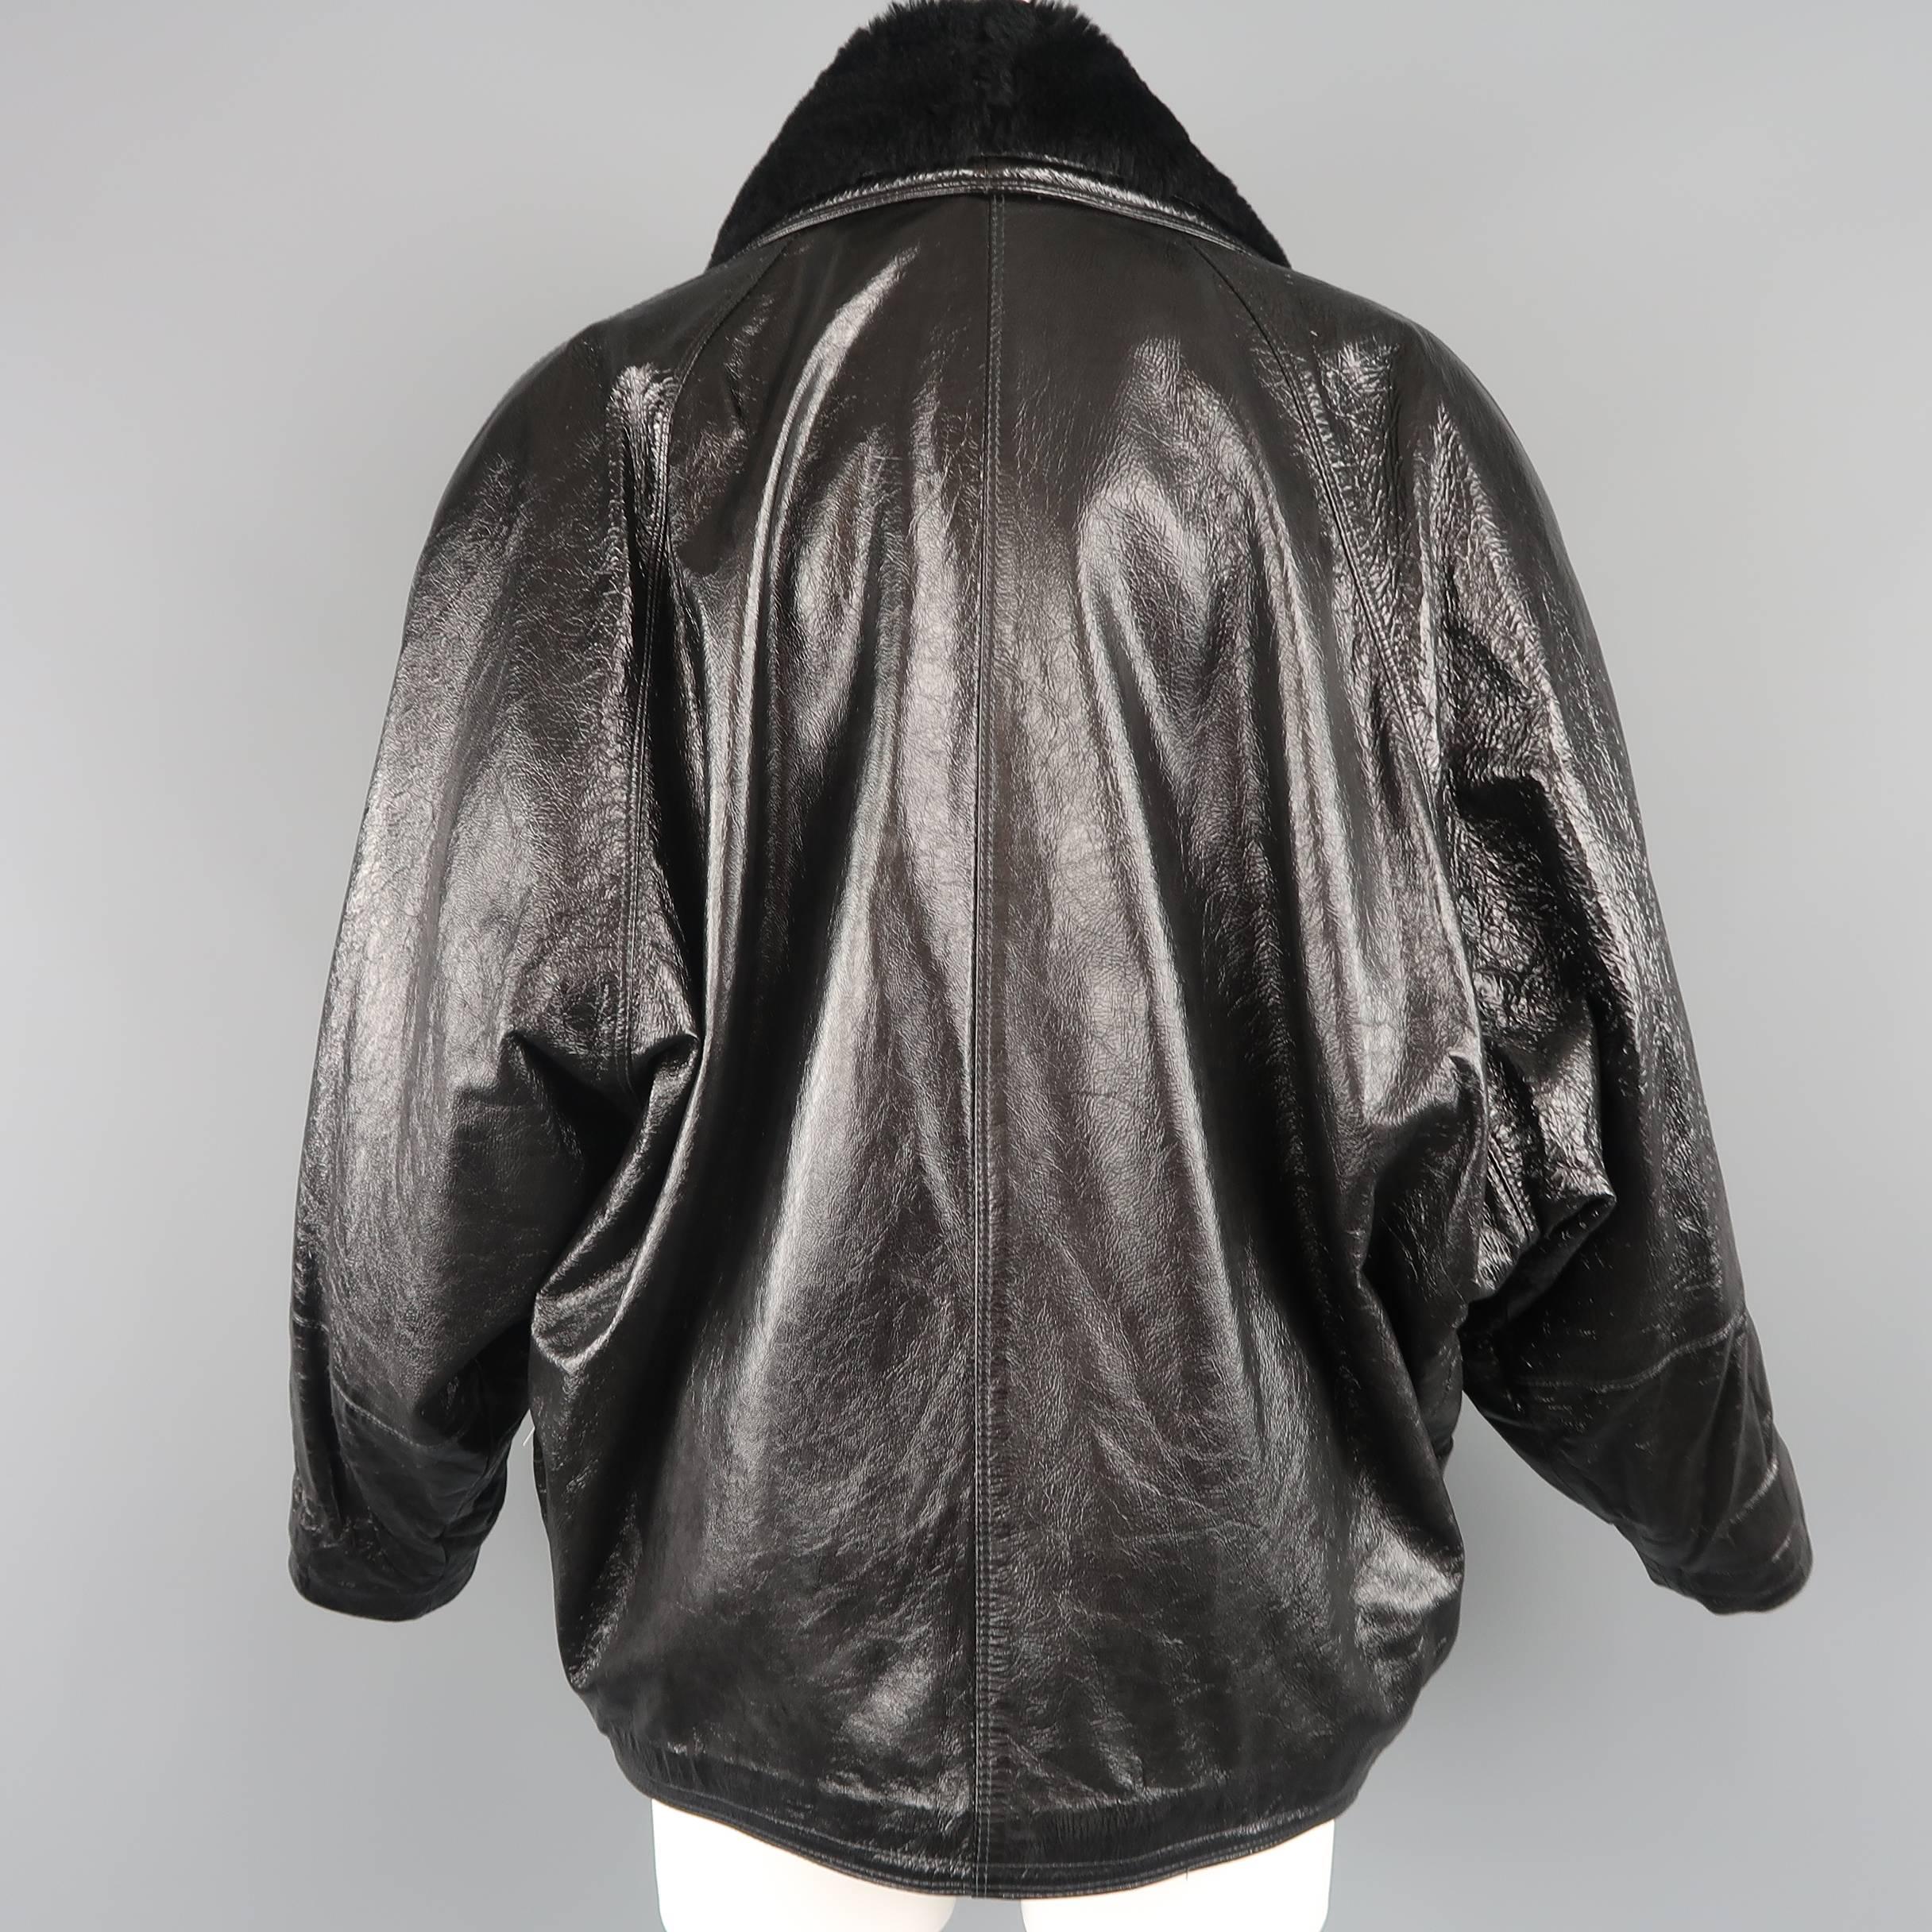 Gianni Versace Coat - Vintage Black Leather Shearling Collar, 1980s Jacket 3